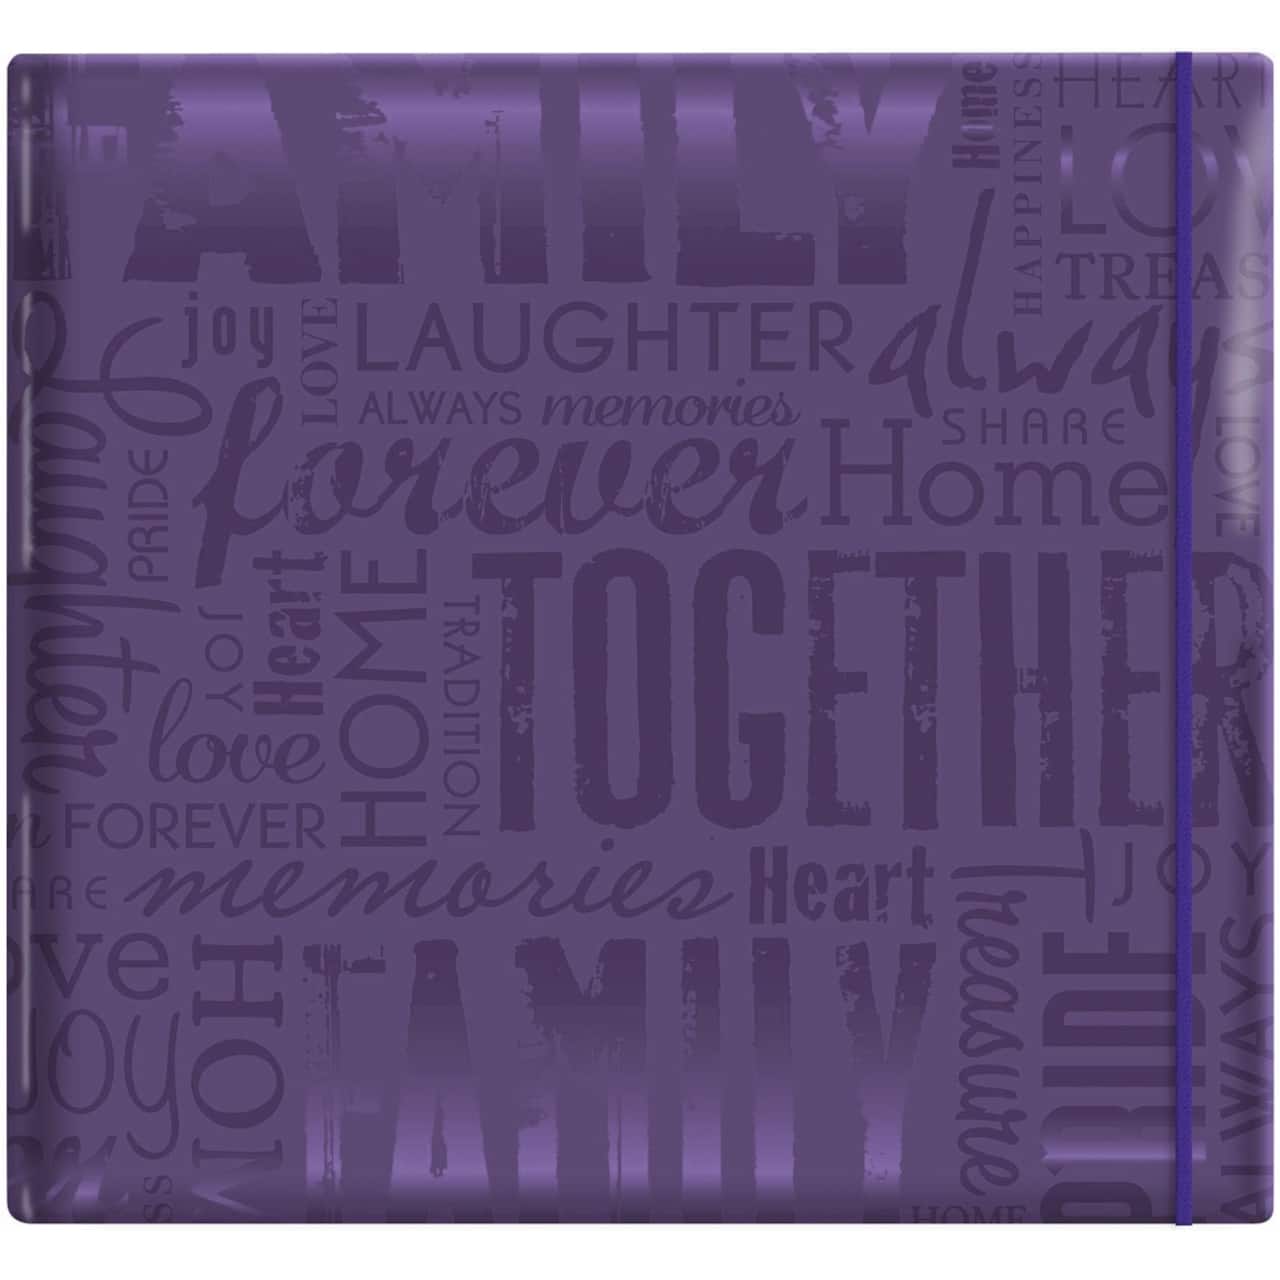 MBI Family Purple Gloss Post Bound Album